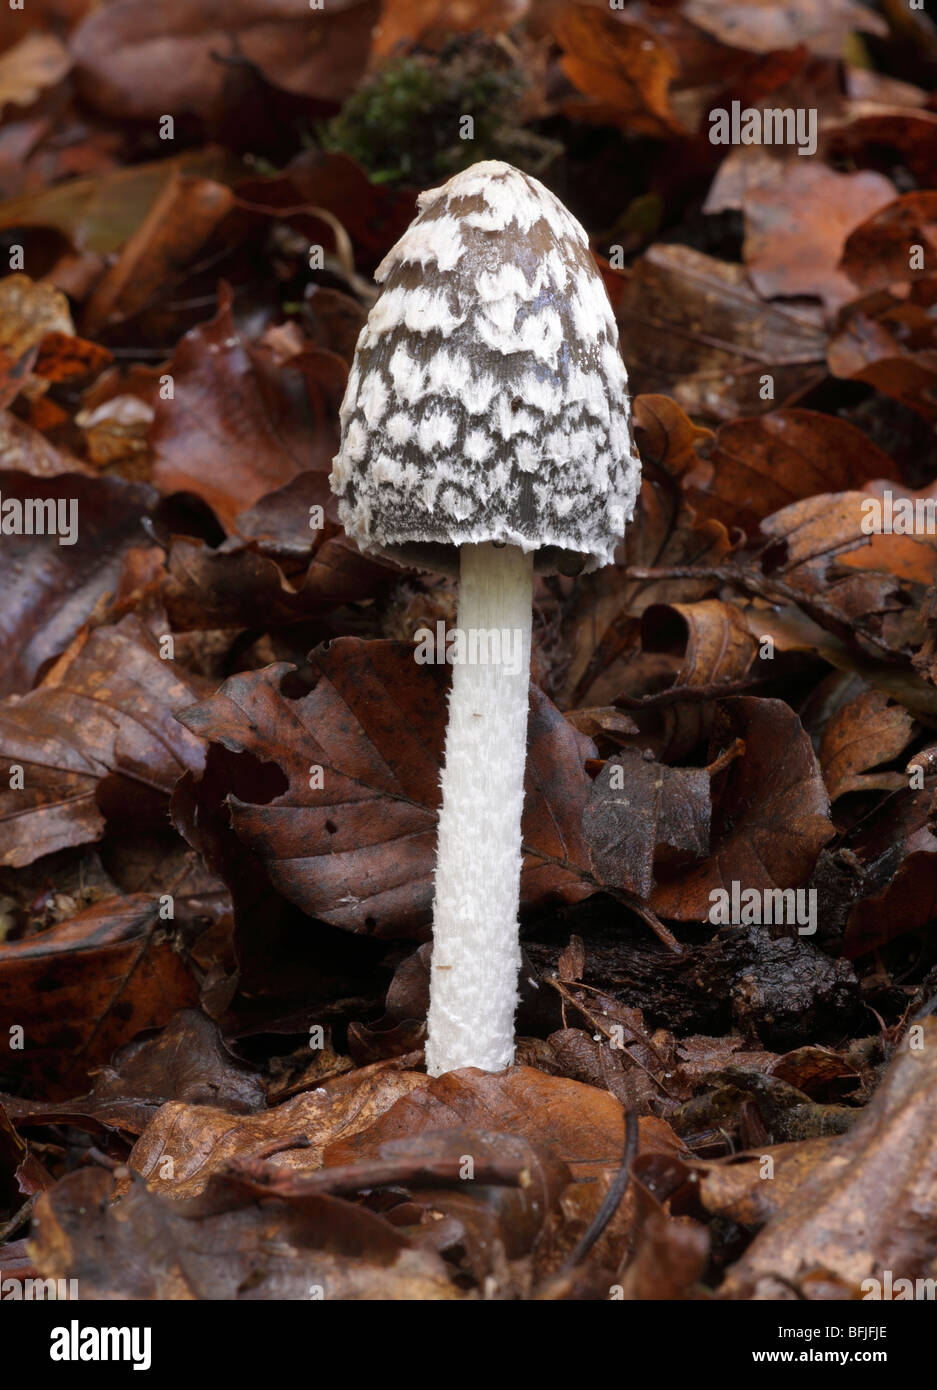 Magpie Ink Cap Fungus, Coprinus picaceus, on Leaves in Sussex, UK Stock Photo